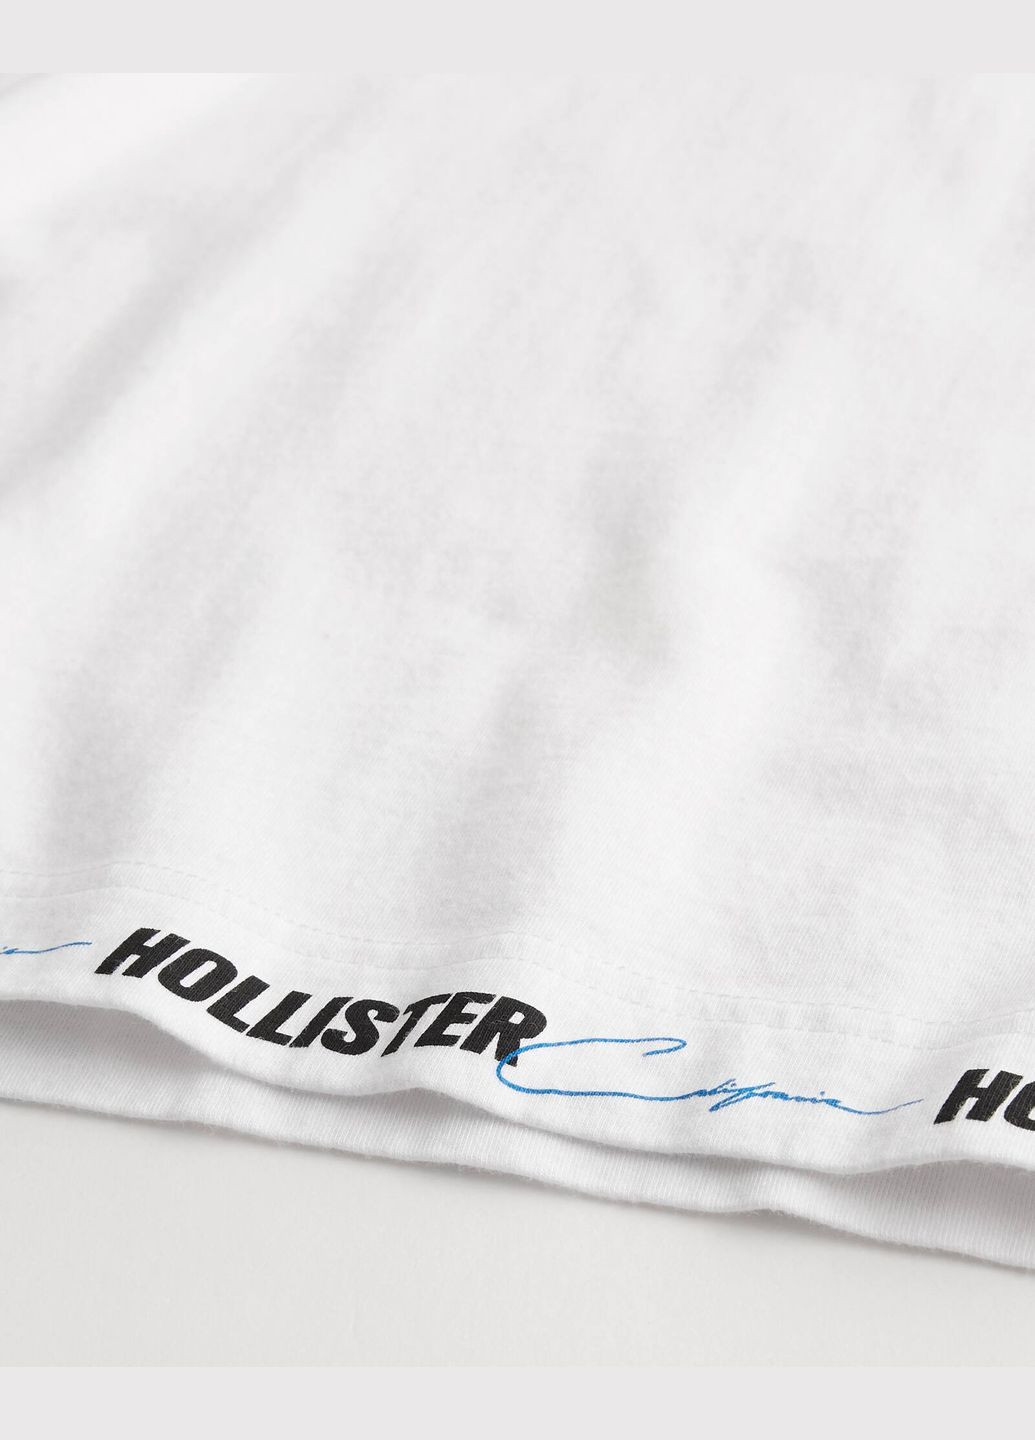 Белая футболка hc9337m Hollister